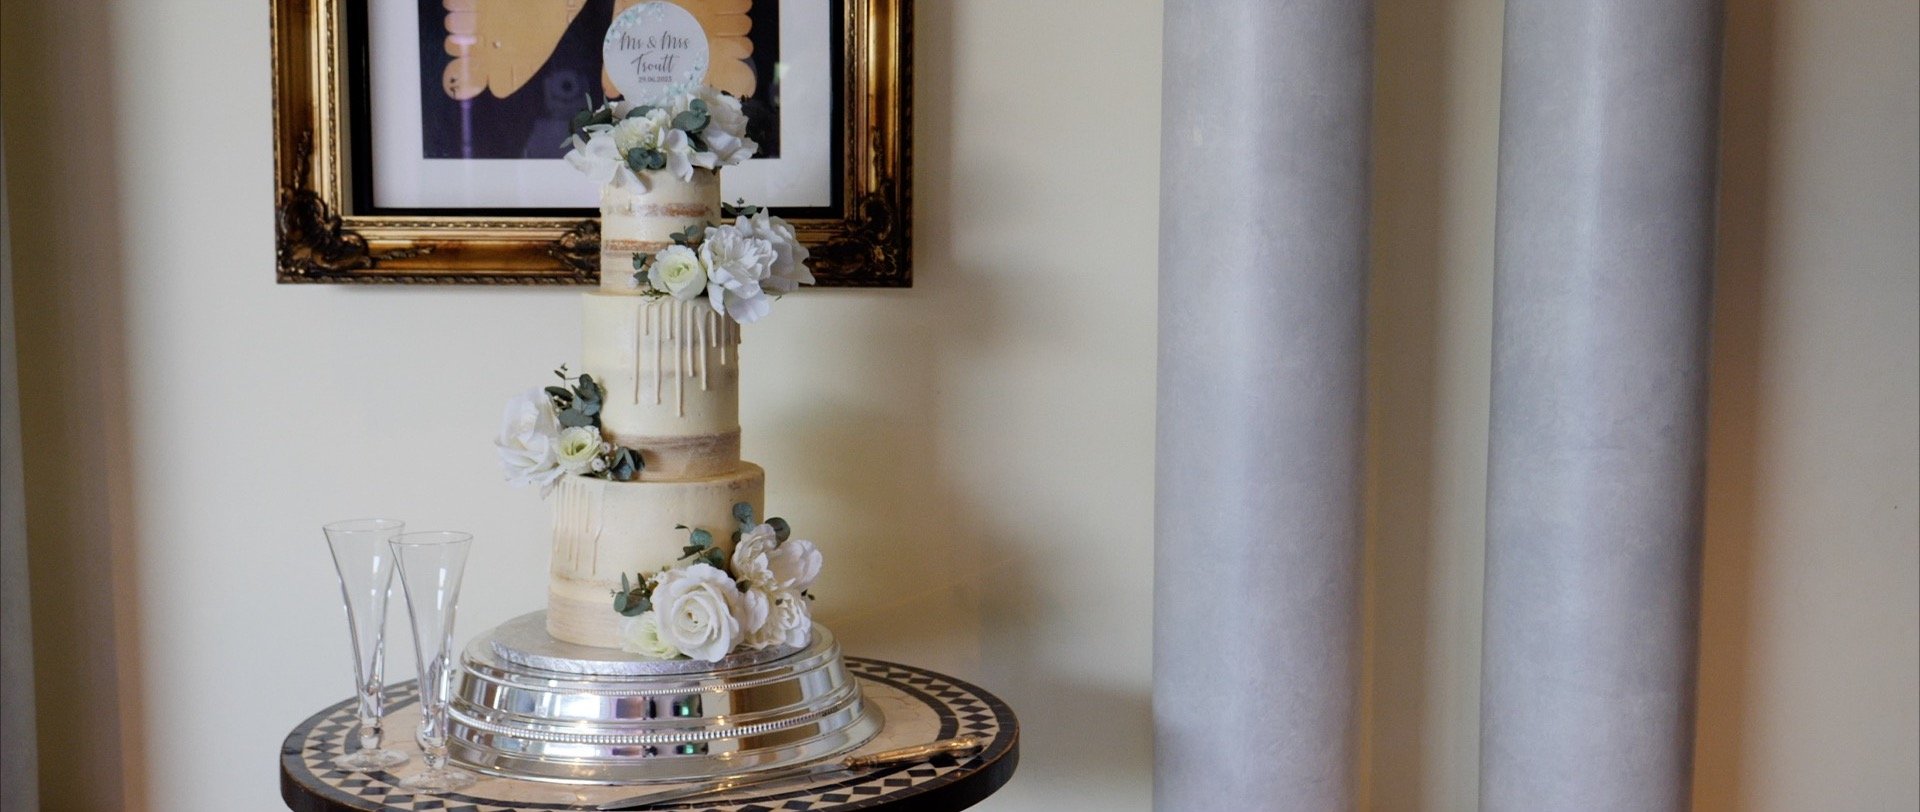 Frienr Manor Wedding Cake Essex.jpg